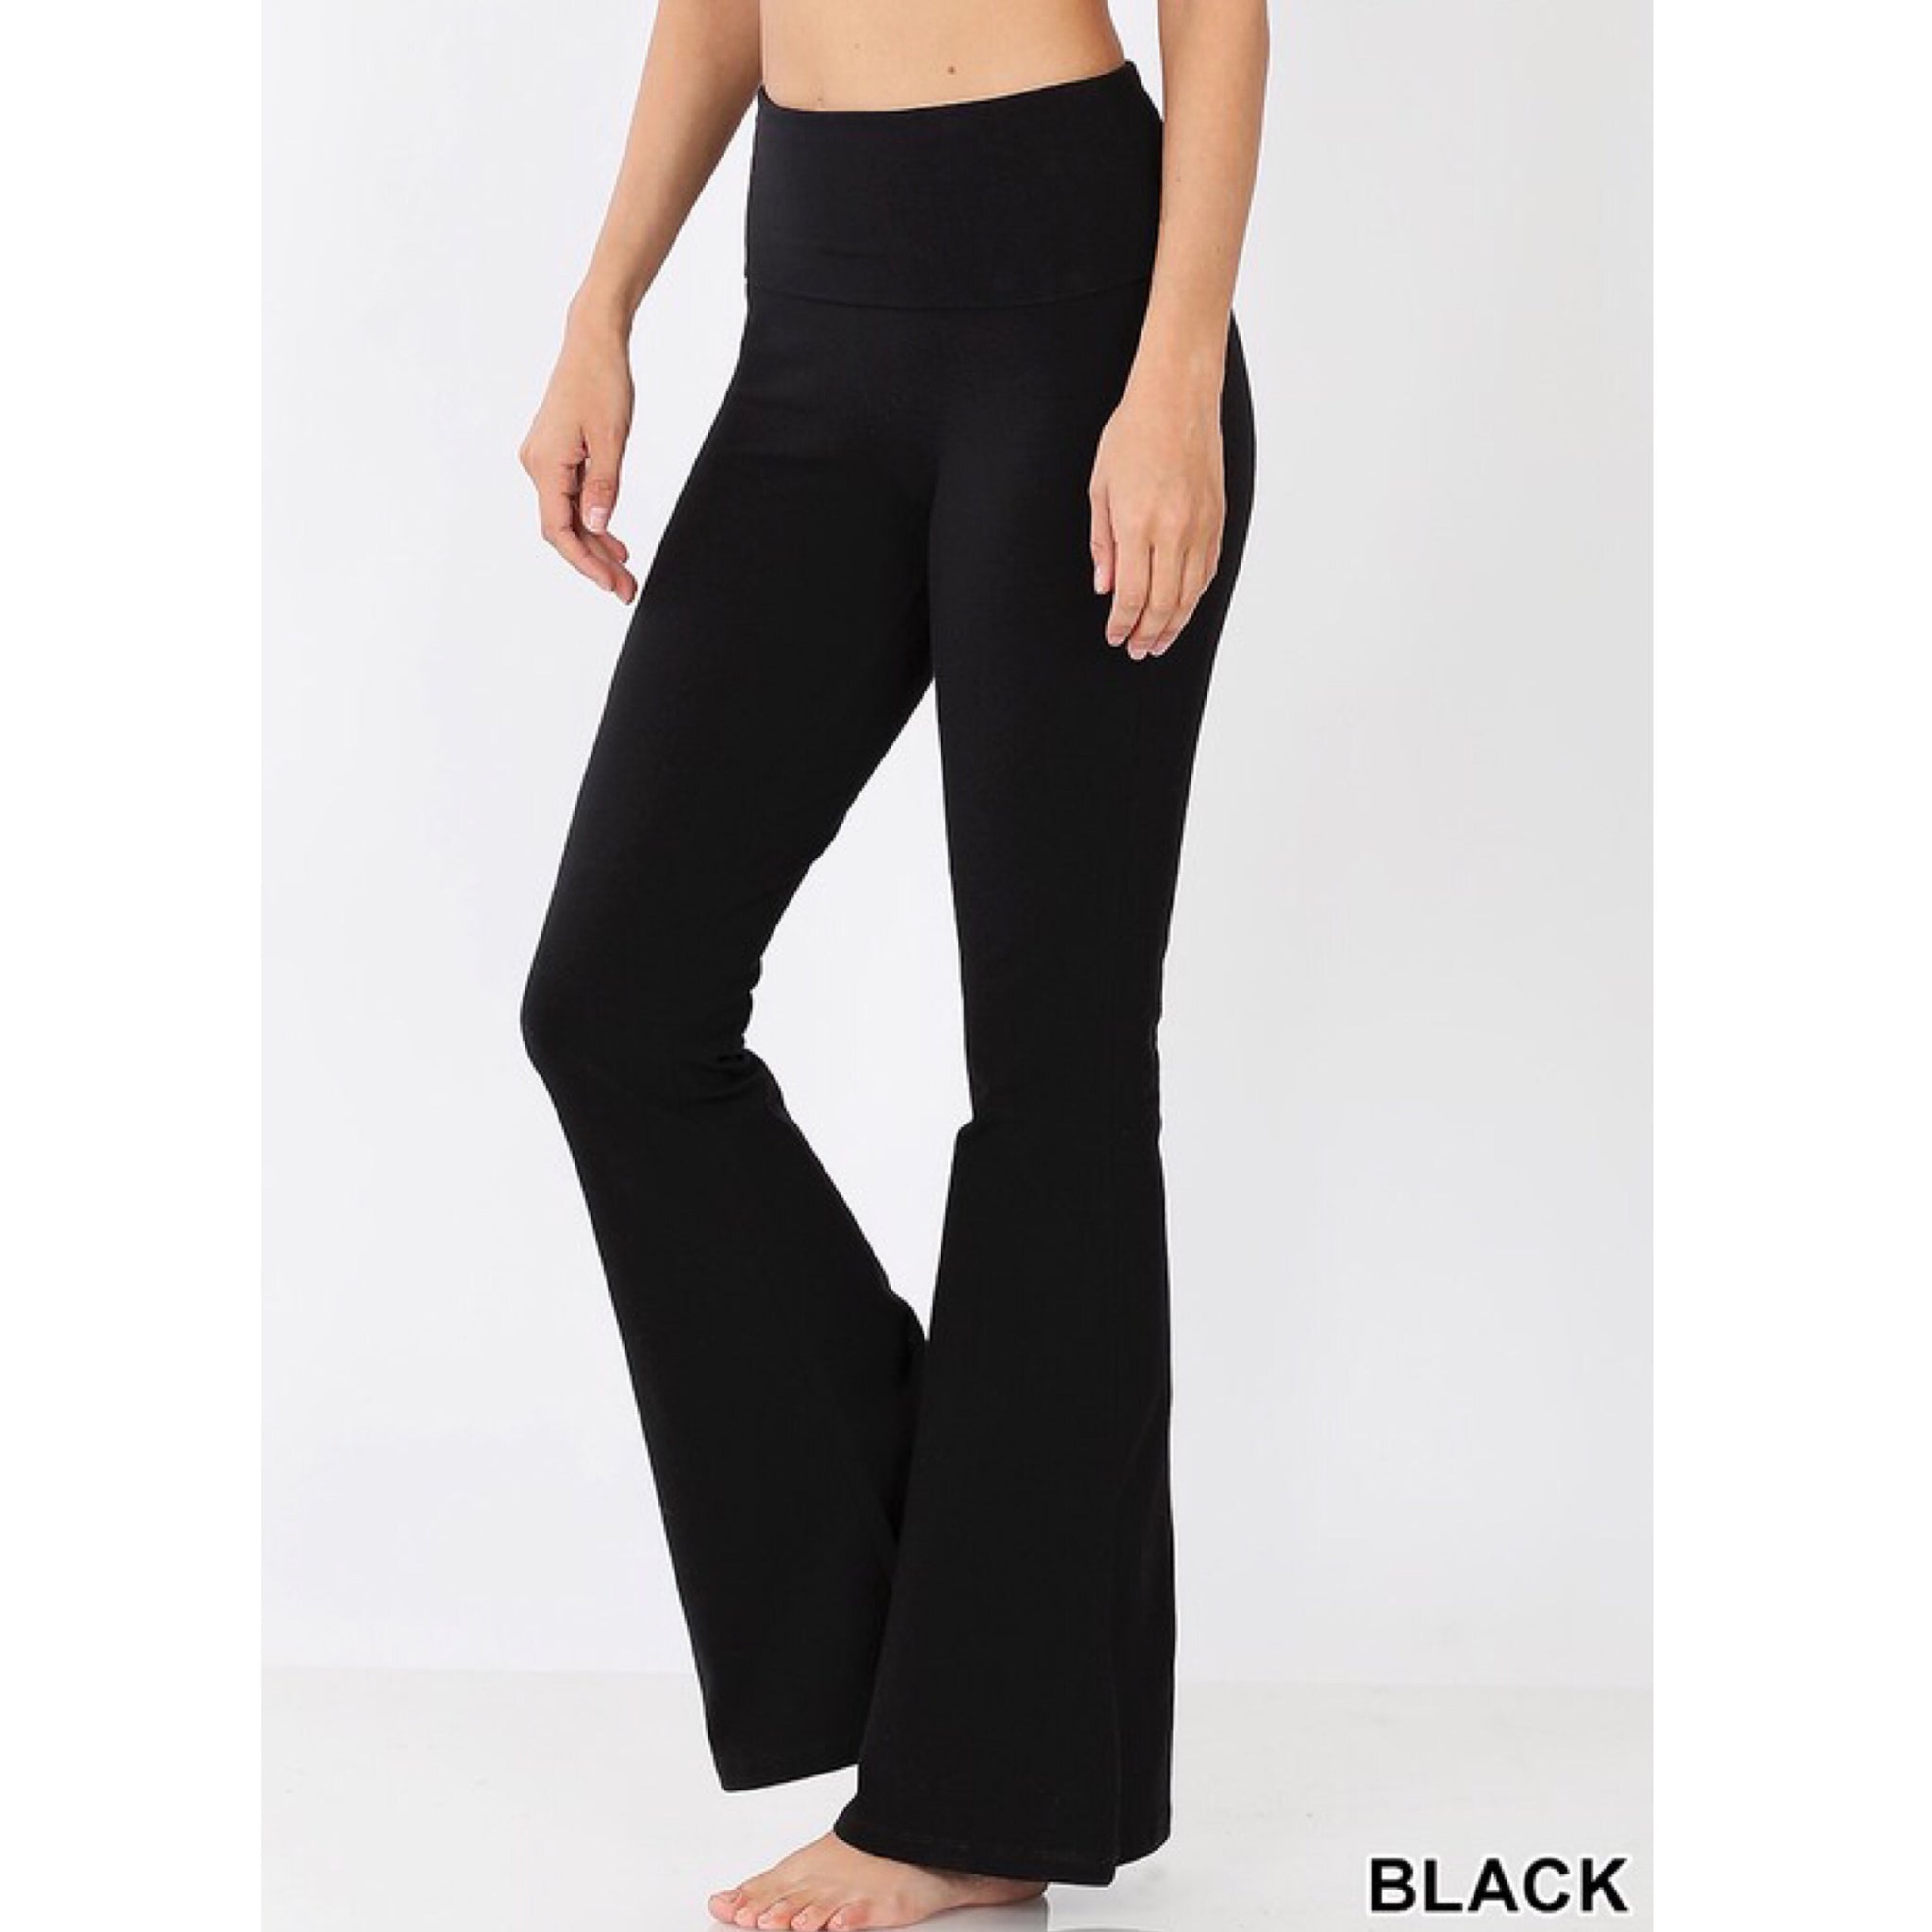 Polka Dot Hot Yoga Pants Fold Over/Low Rise Legging SXYFITNESS